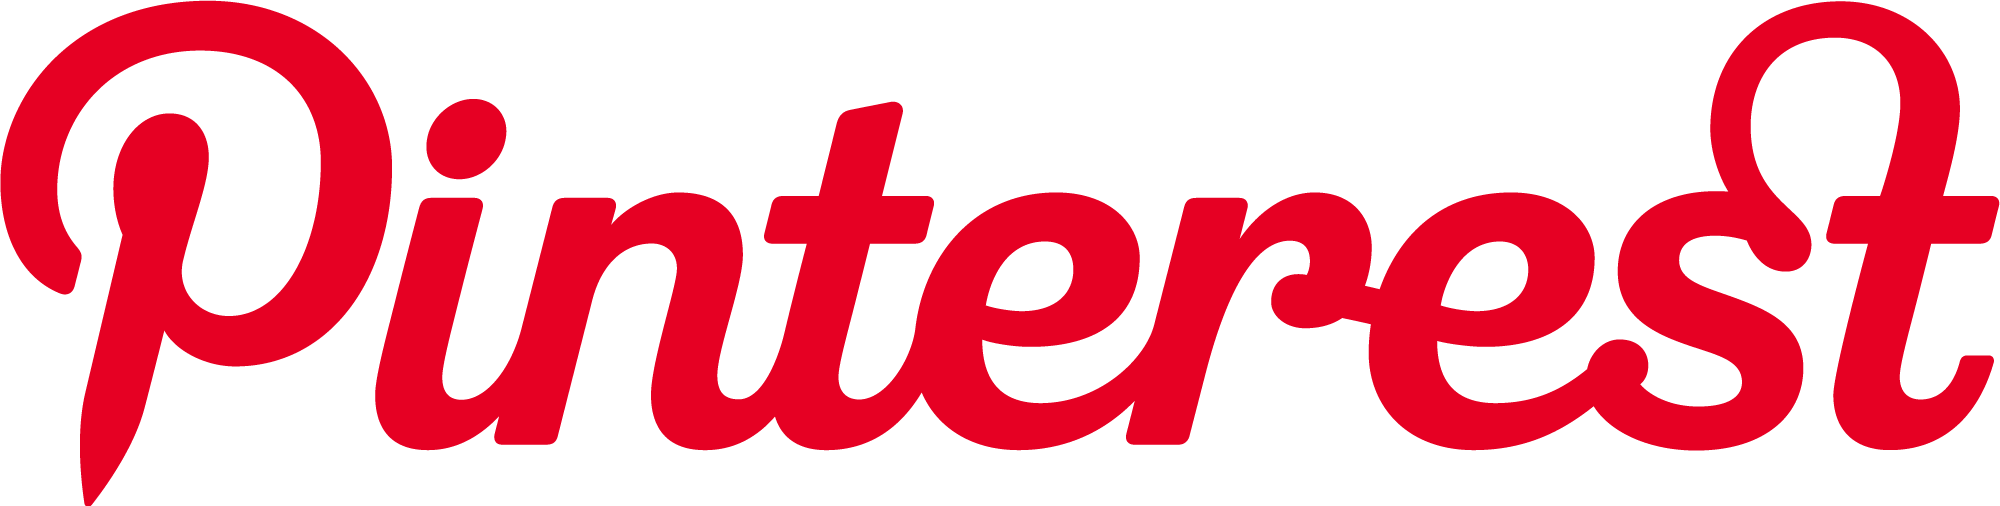 Pinterest Name Logo